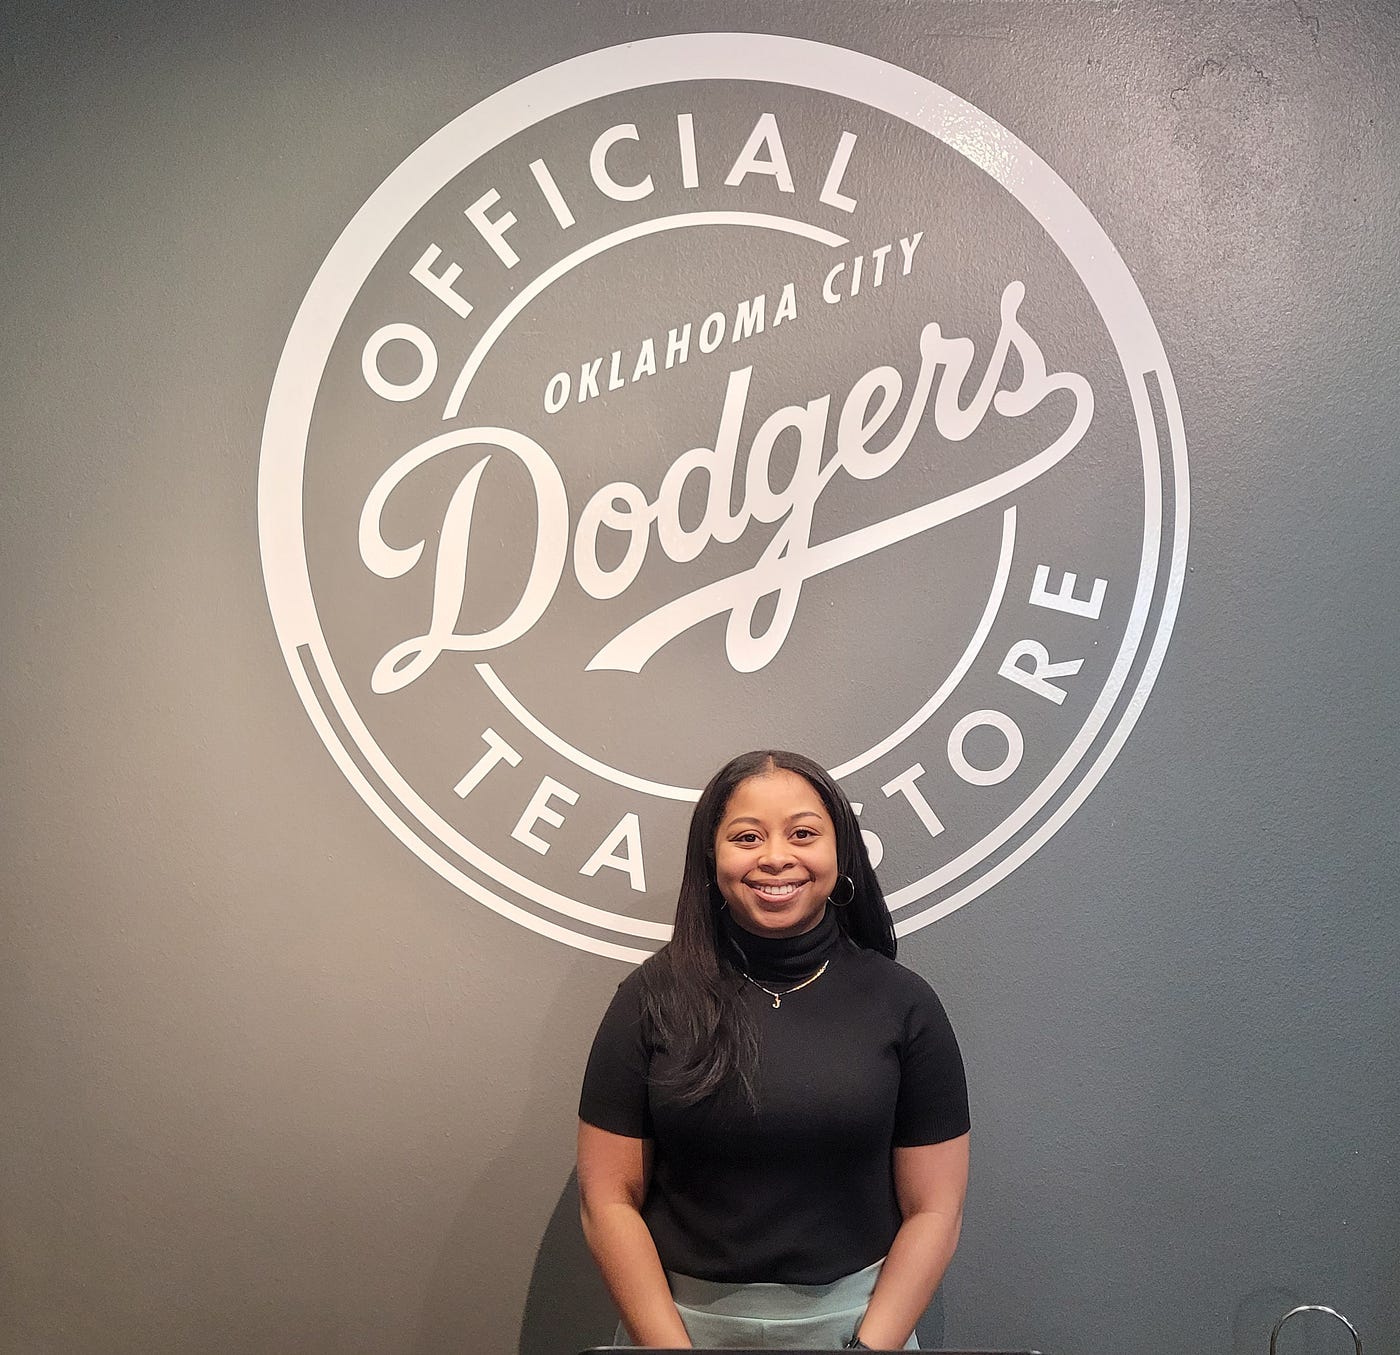 Buchanan Designs OKC Dodgers Team Store Growth, by Lisa Johnson, Beyond  the Bricks